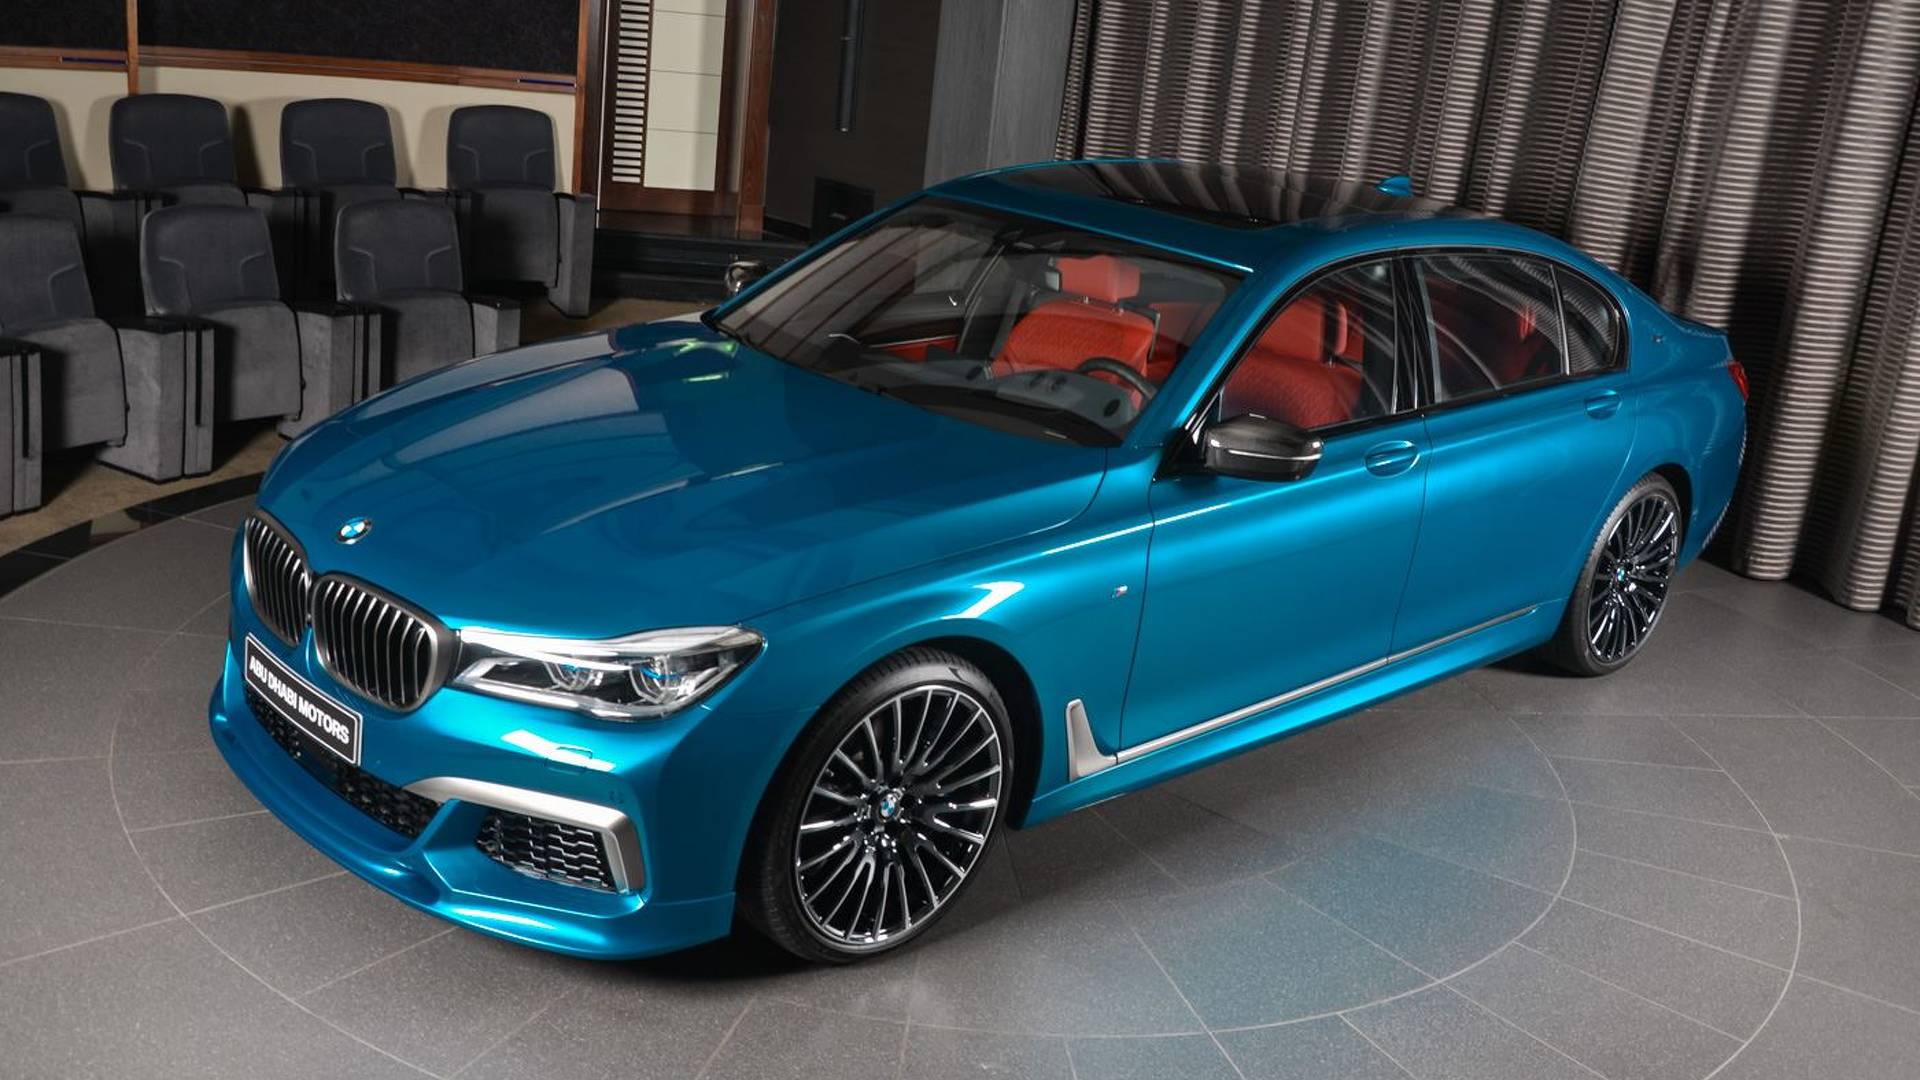 M760Li Individual Long Beach Blue Is BMW Abu Dhabi's Latest Toy